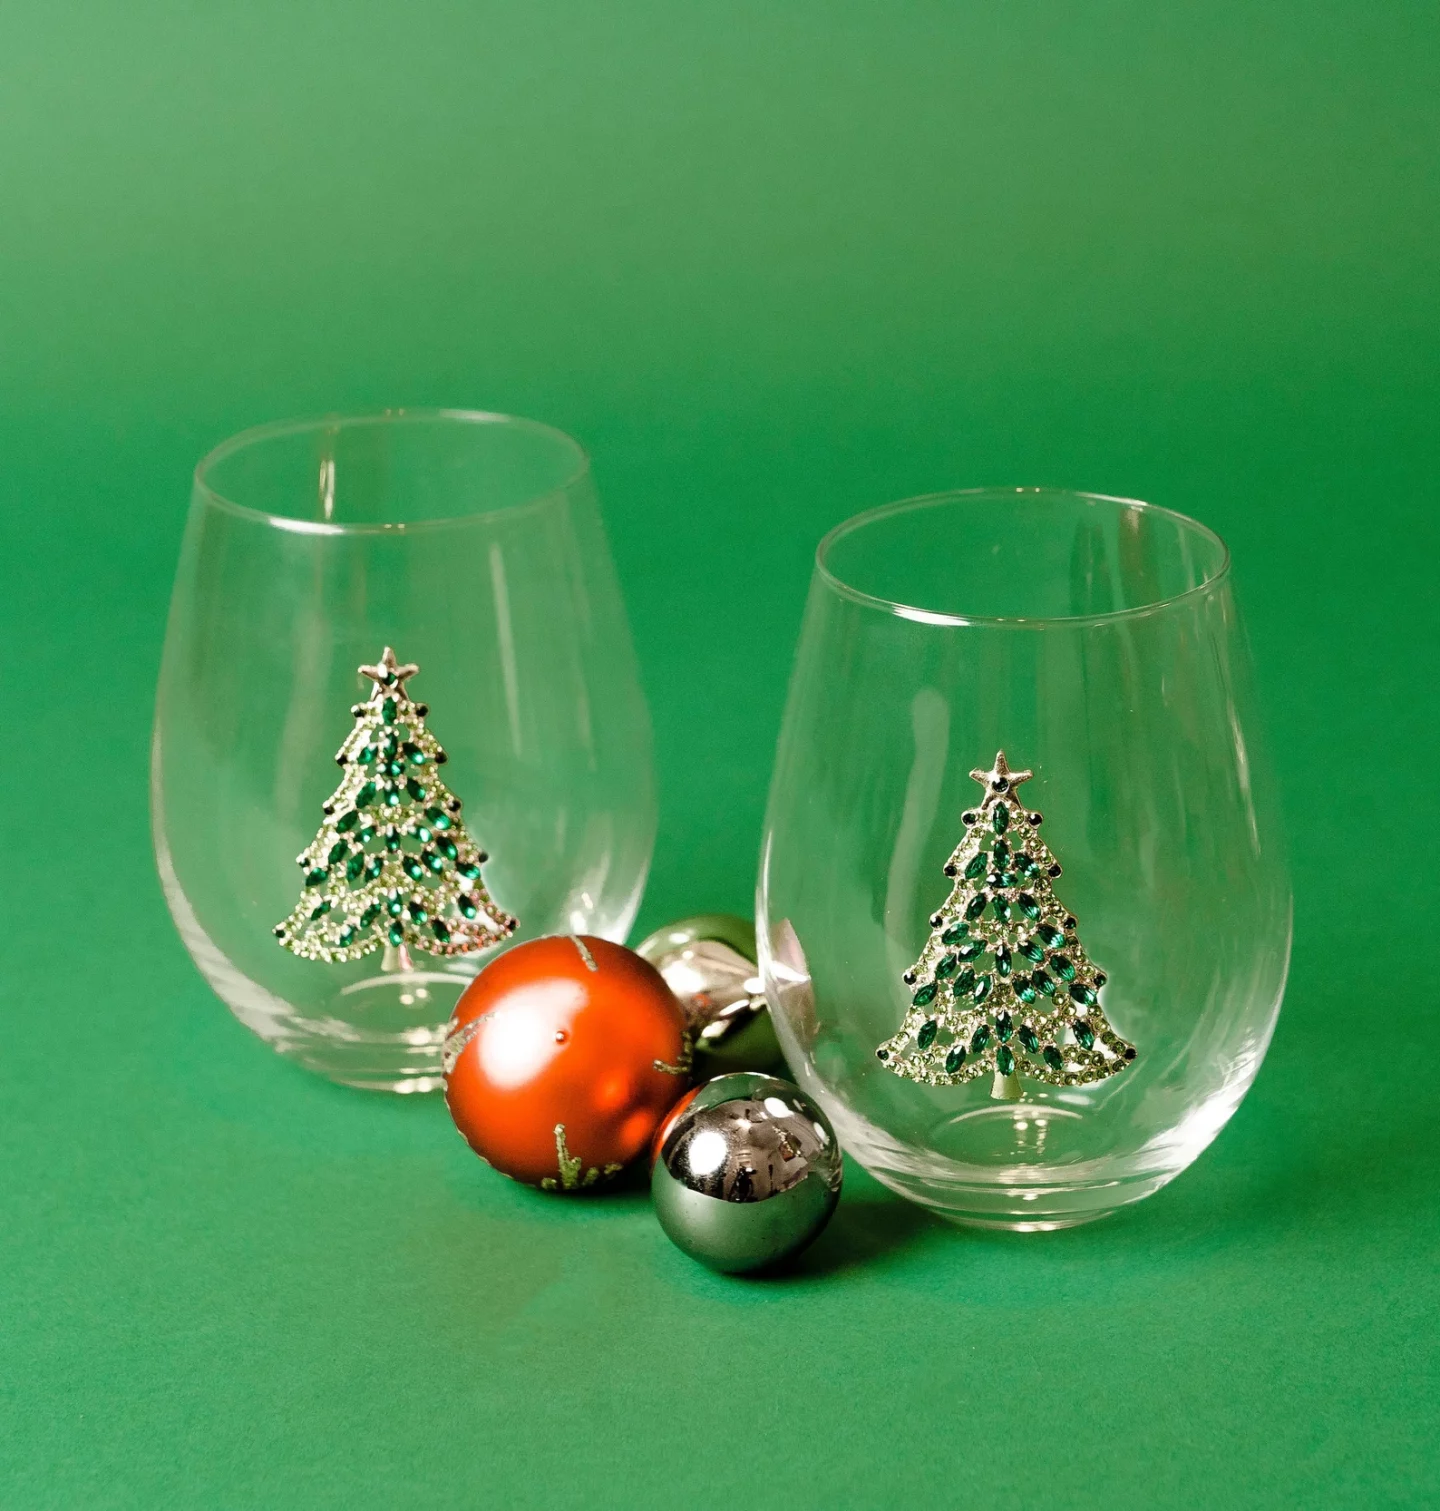 Neiman Marcus Hand-Painted Santa Wine Glasses, Set of 4